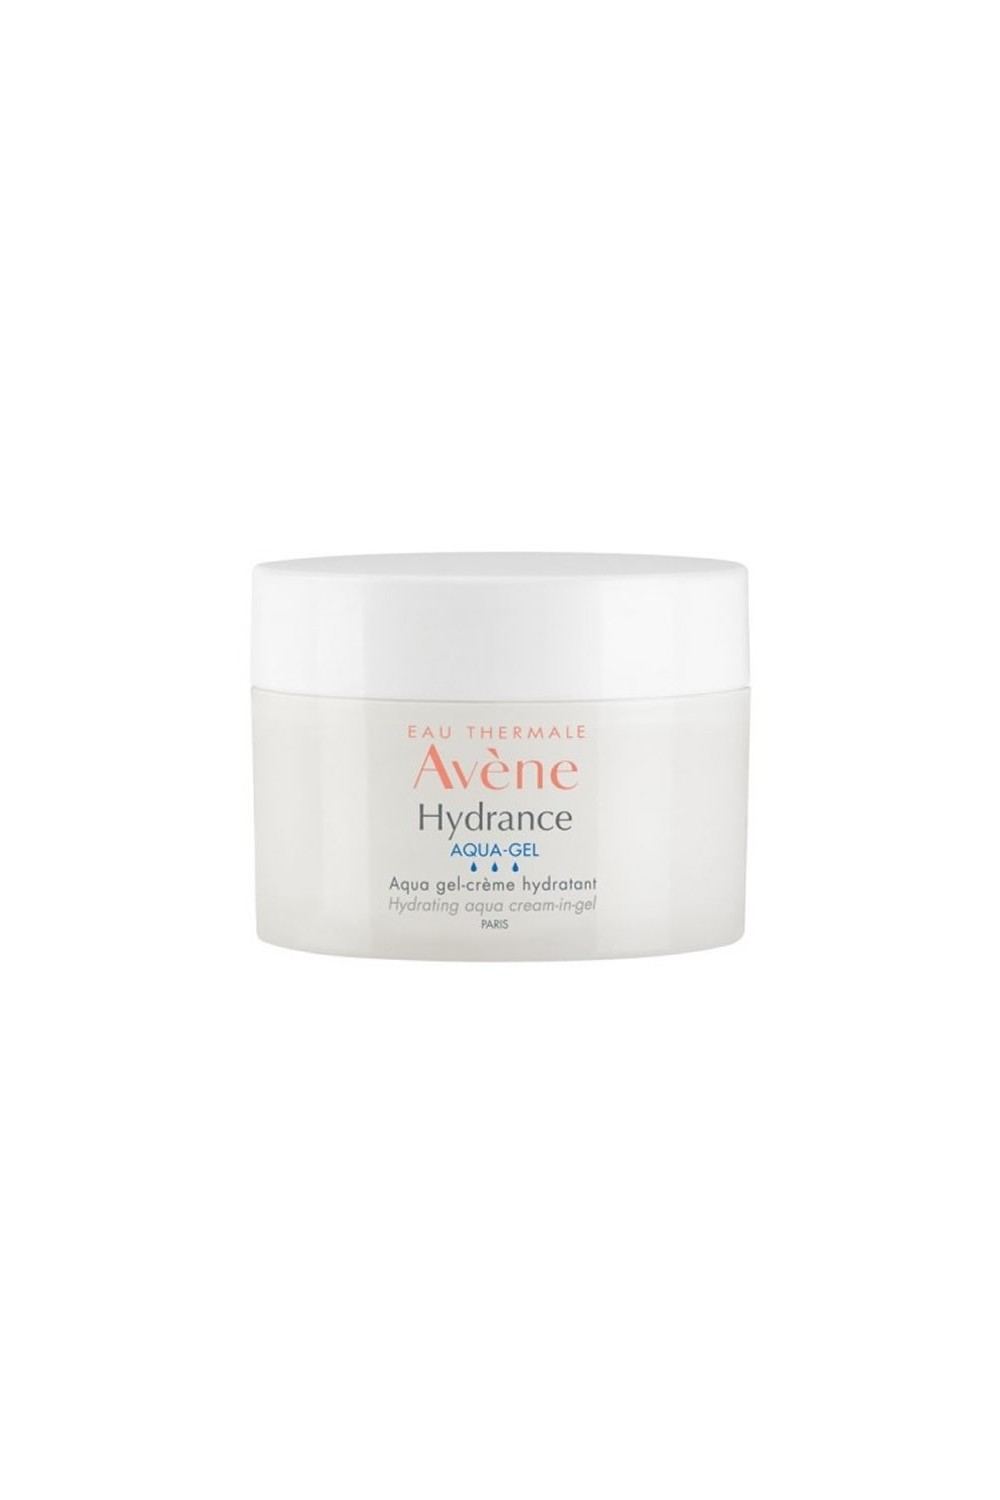 AVÈNE - Avène Hydrance Aqua-Gel Moisturizing Cream 50ml